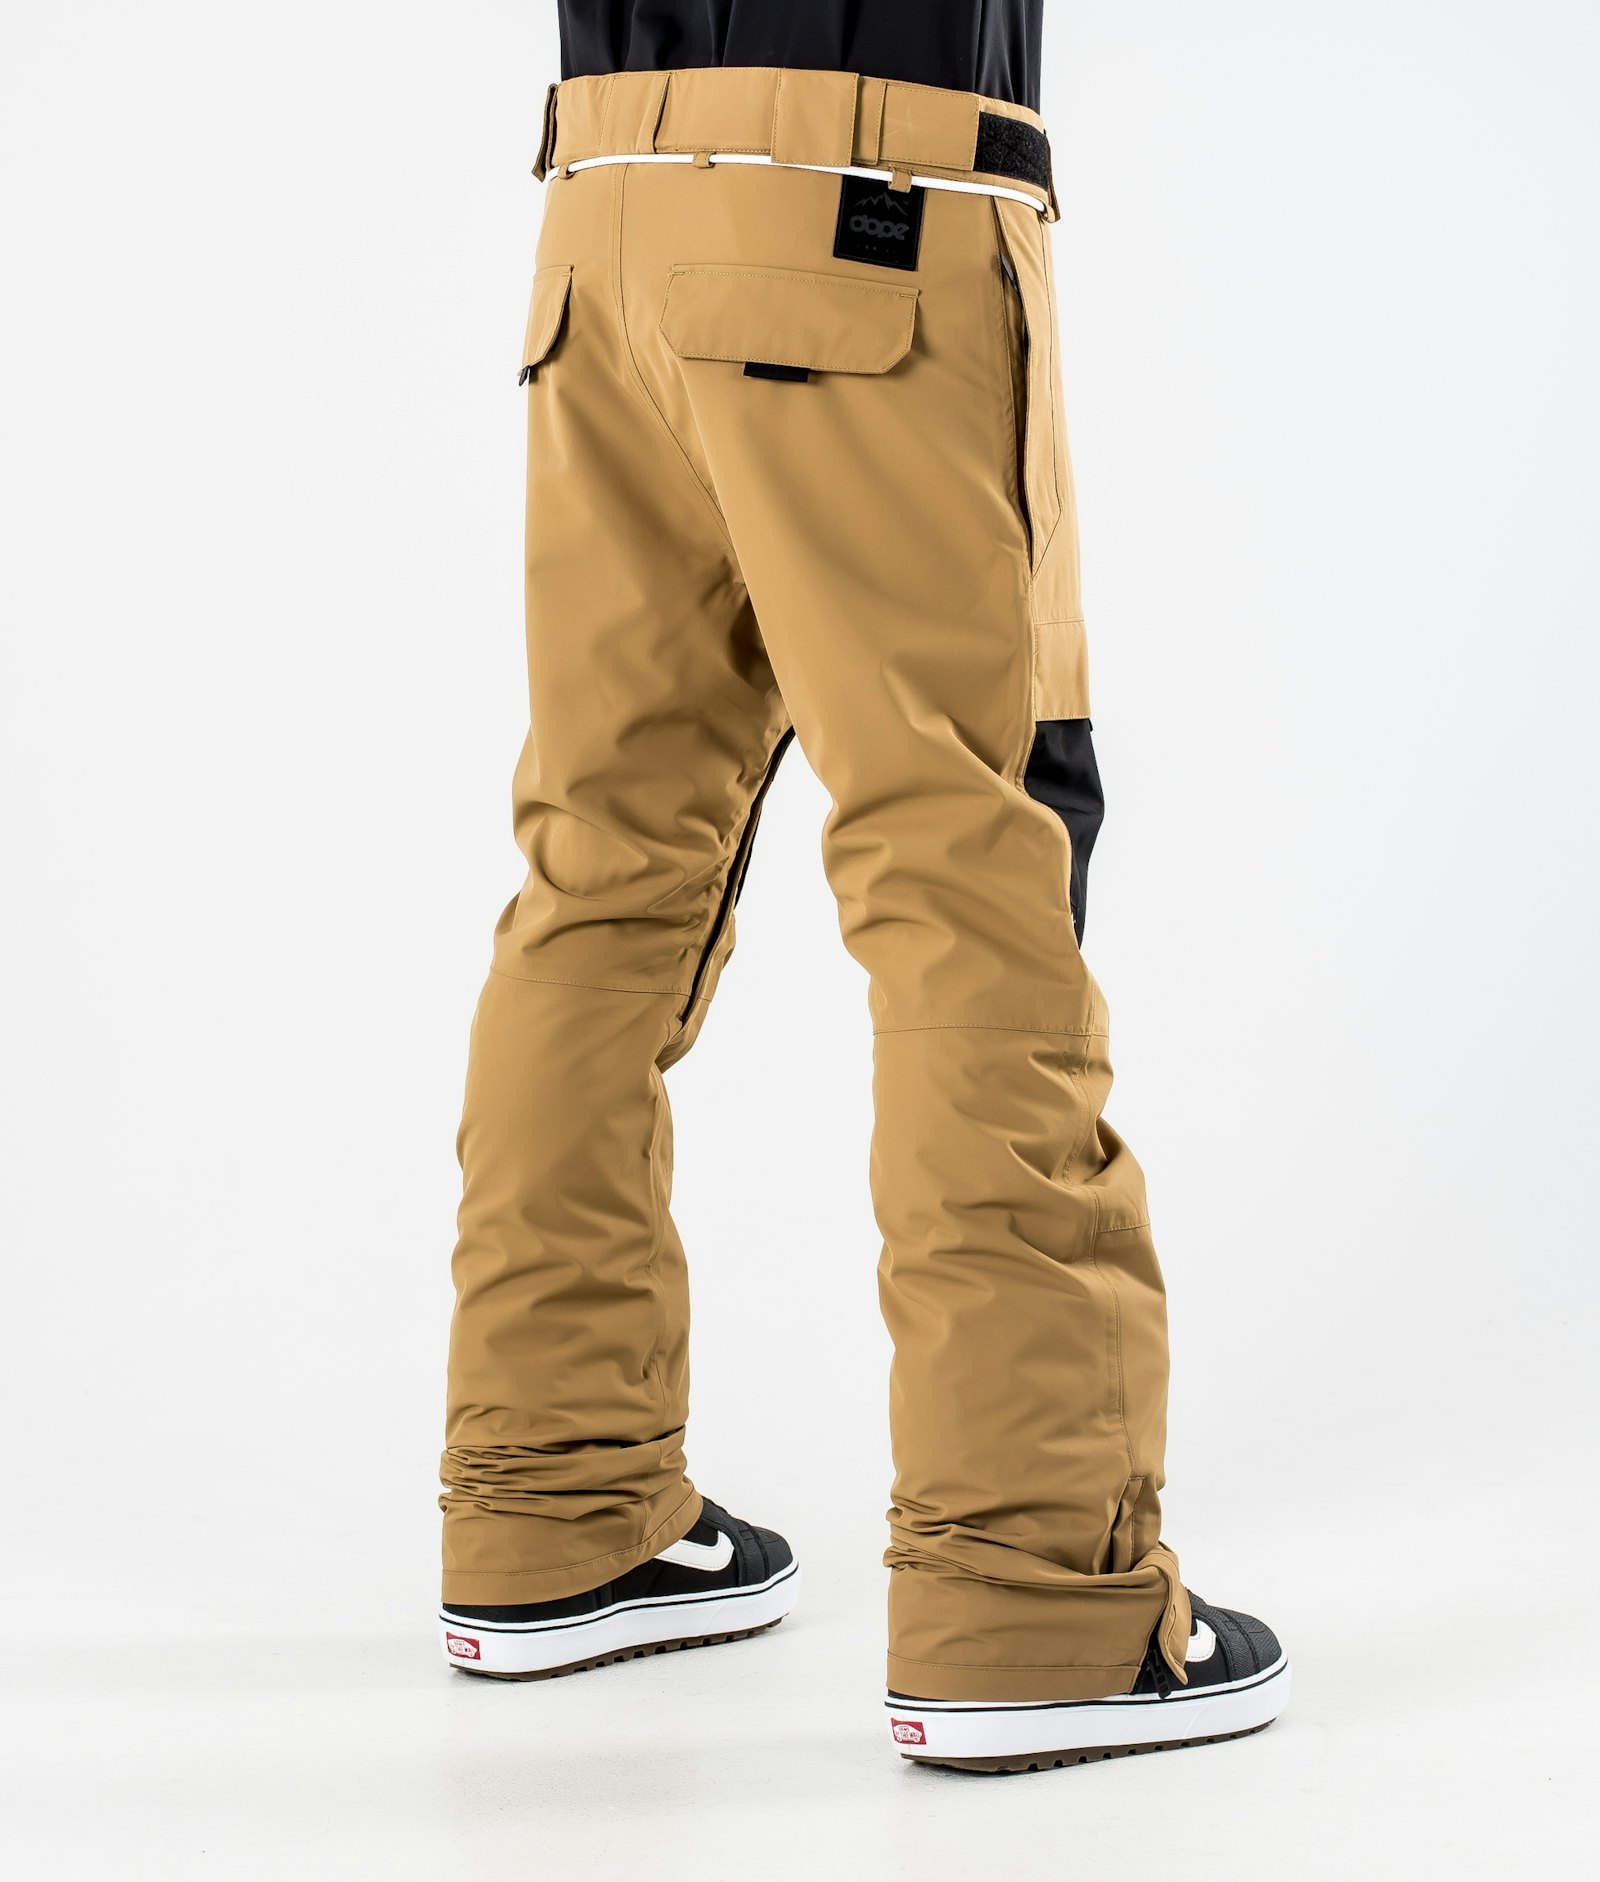 Dope Poise Pantaloni Snowboard Uomo Gold/Black